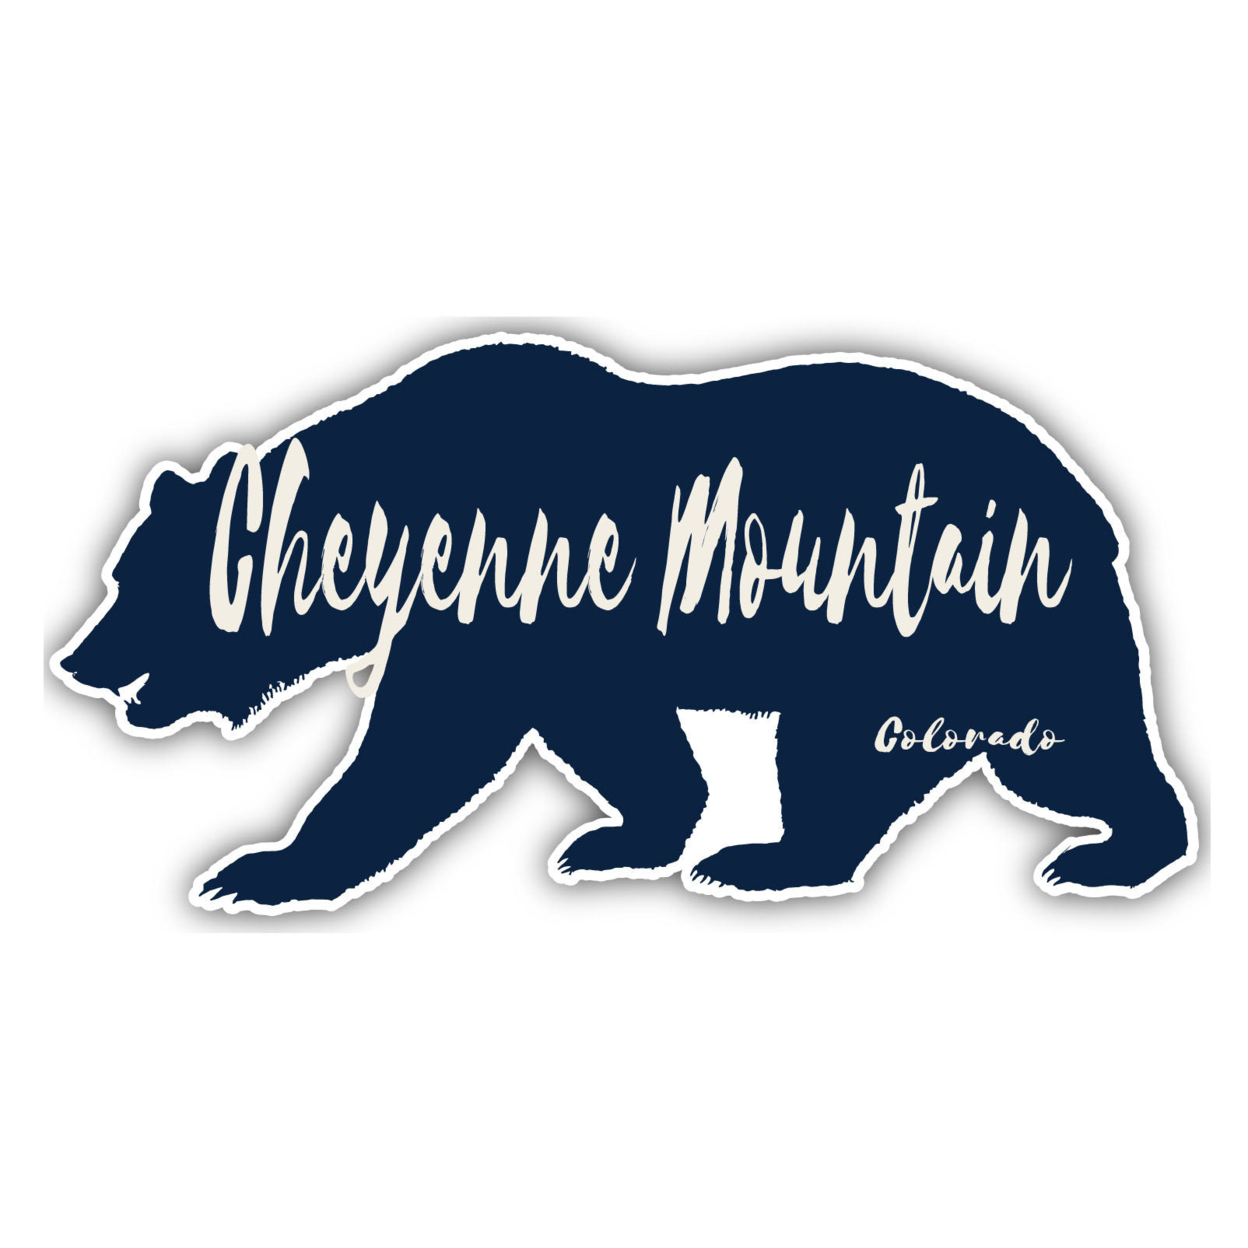 Cheyenne Mountain Colorado Souvenir Decorative Stickers (Choose Theme And Size) - Single Unit, 2-Inch, Camp Life